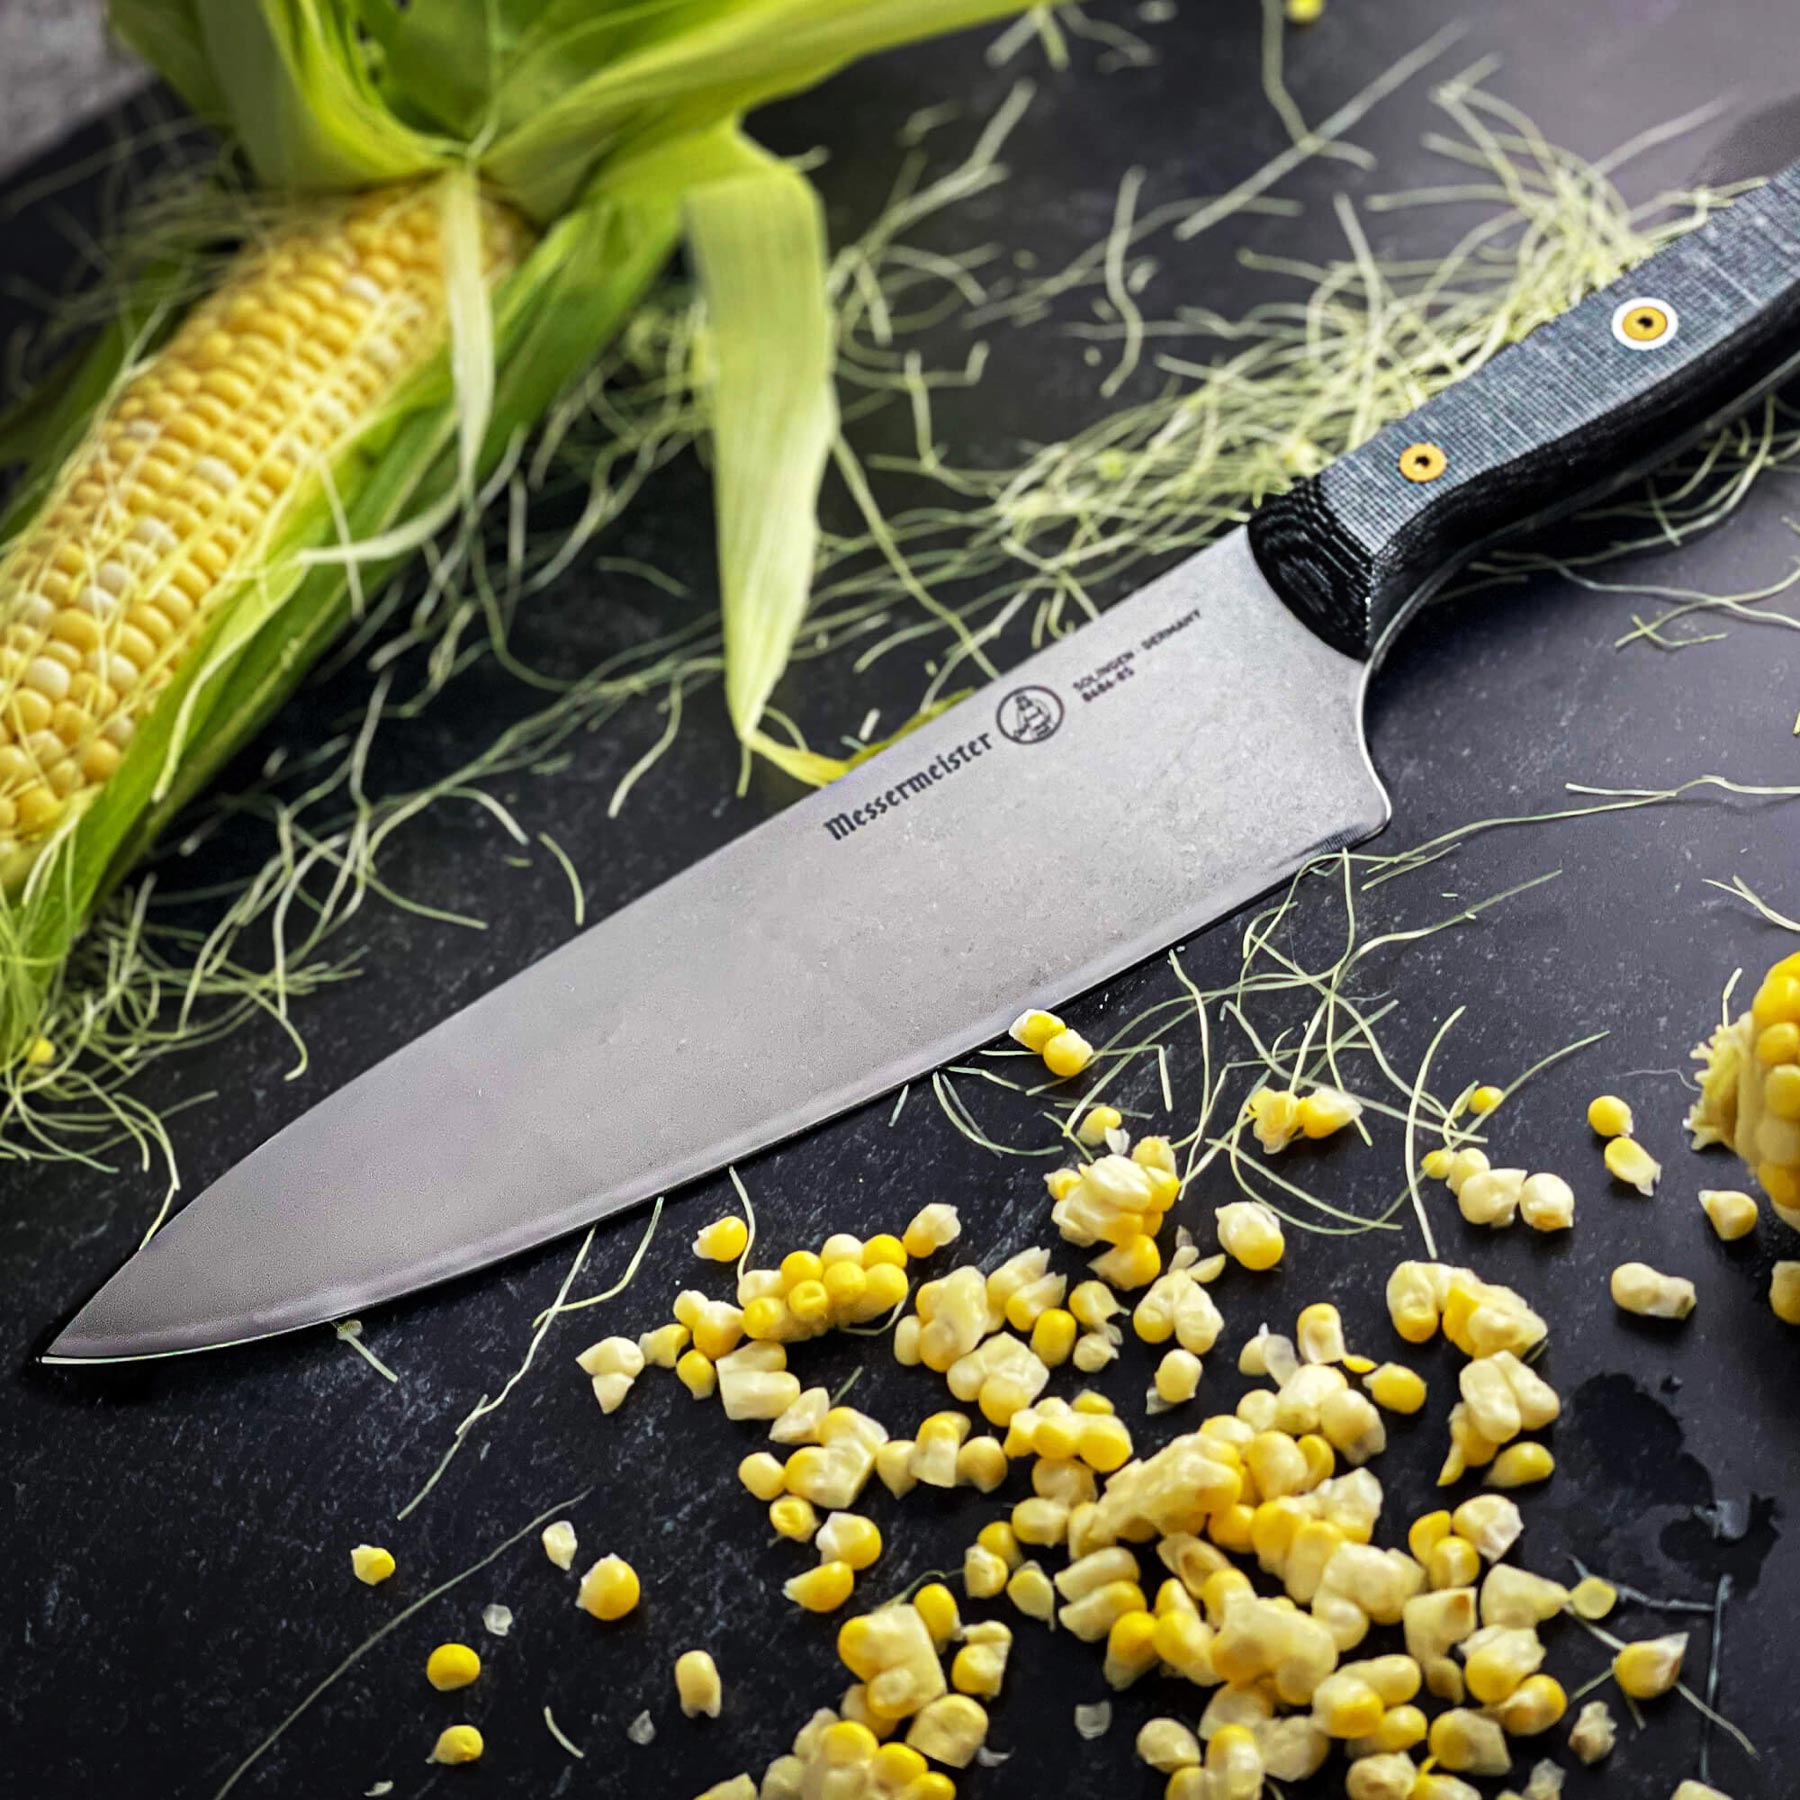 Messermeister Pro Series 8 Chef's Knife